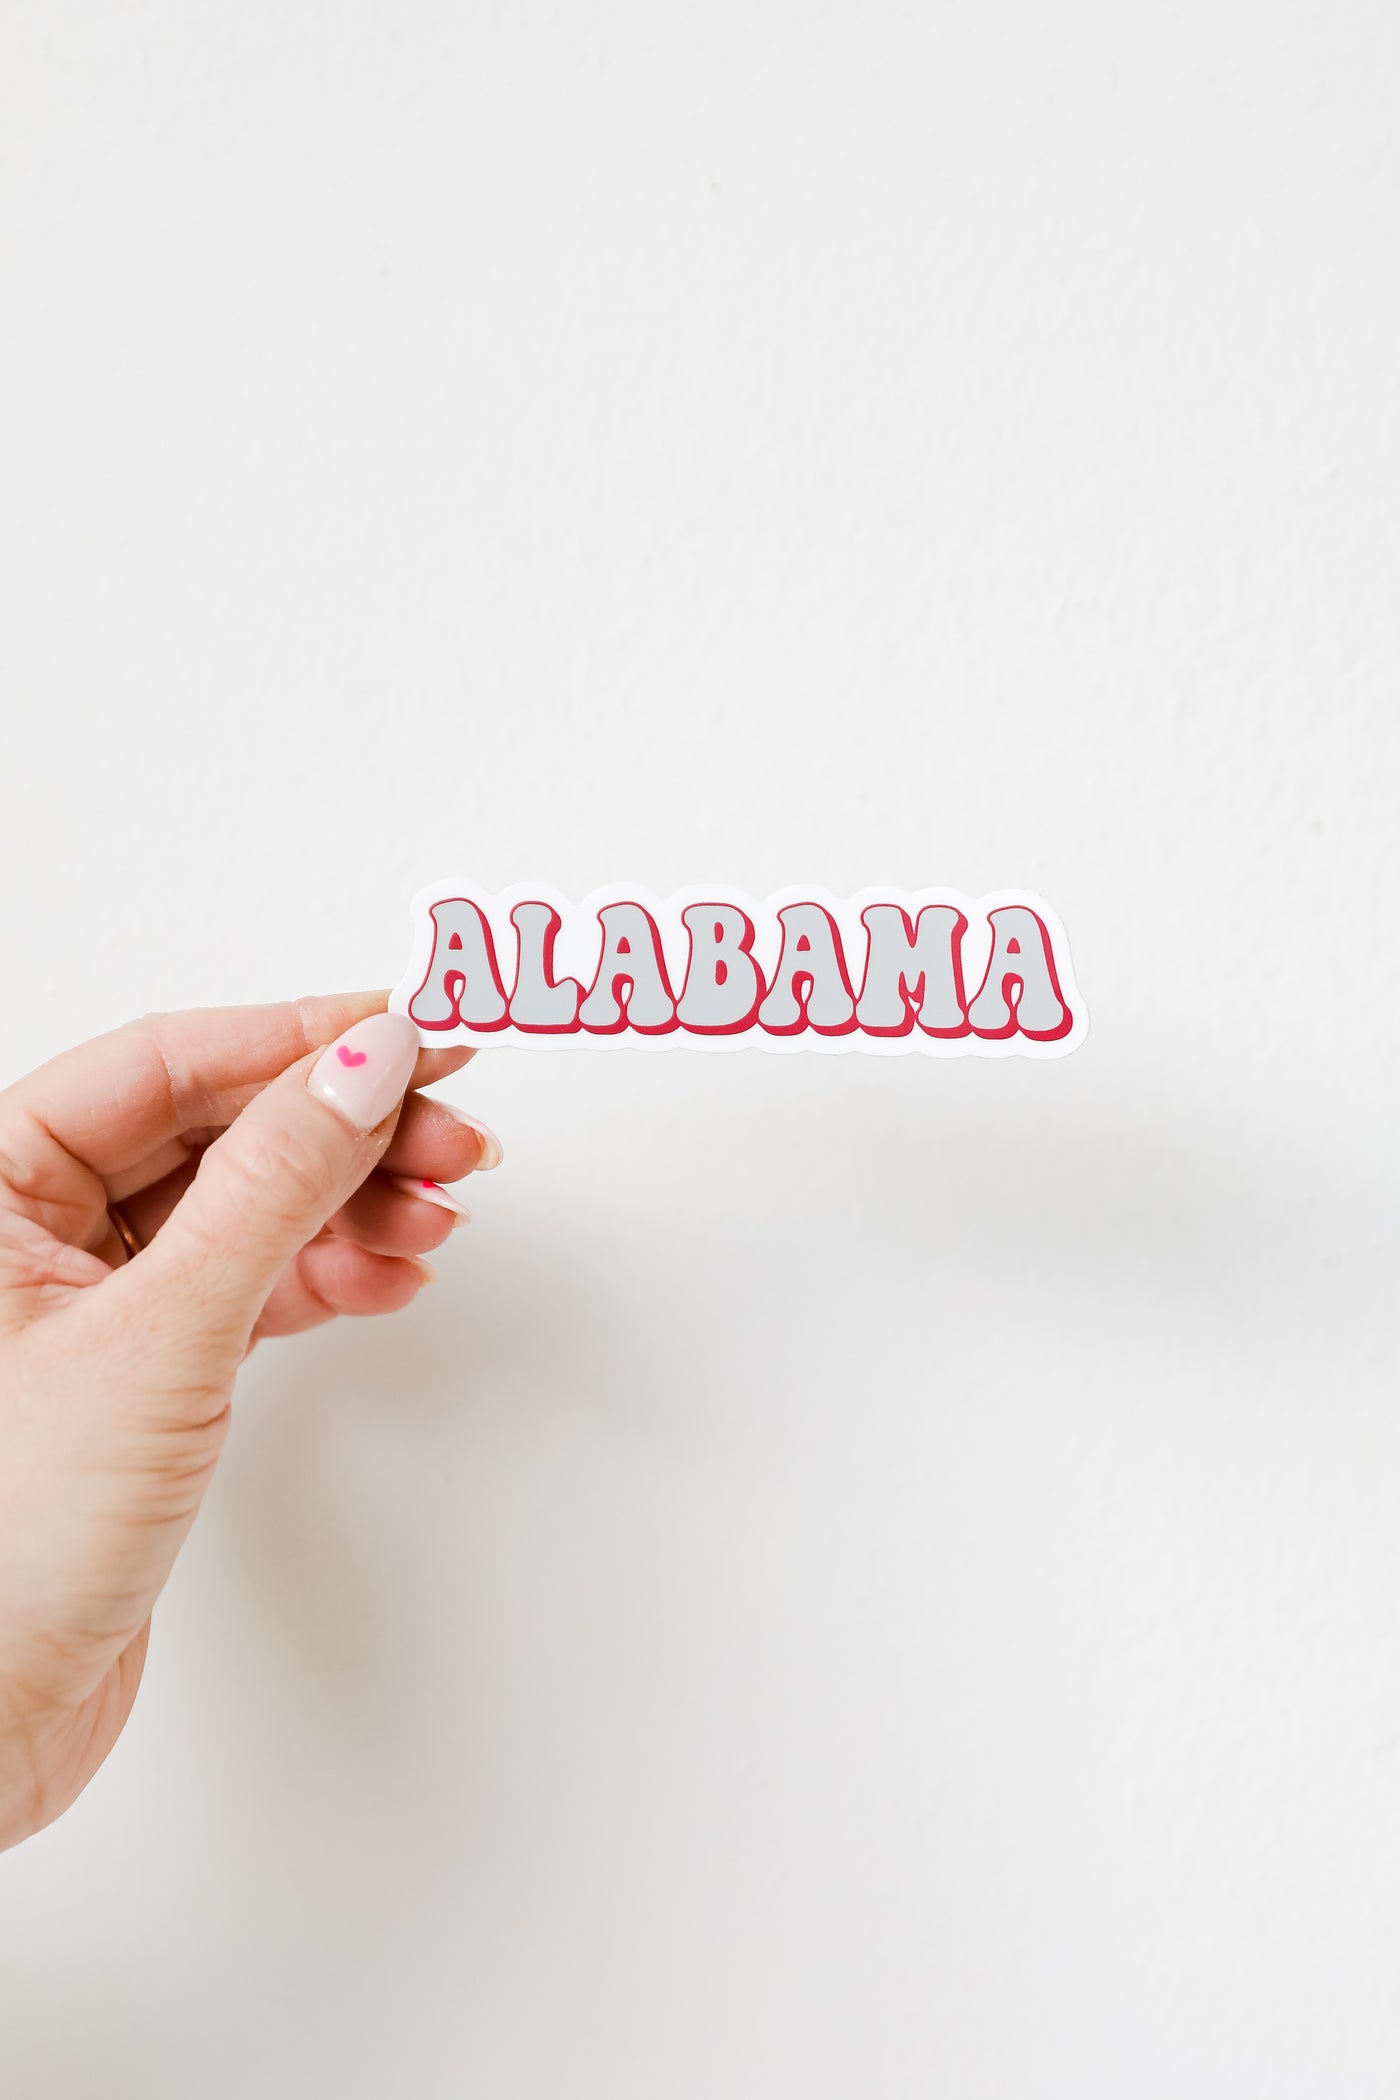 Alabama Sticker close up